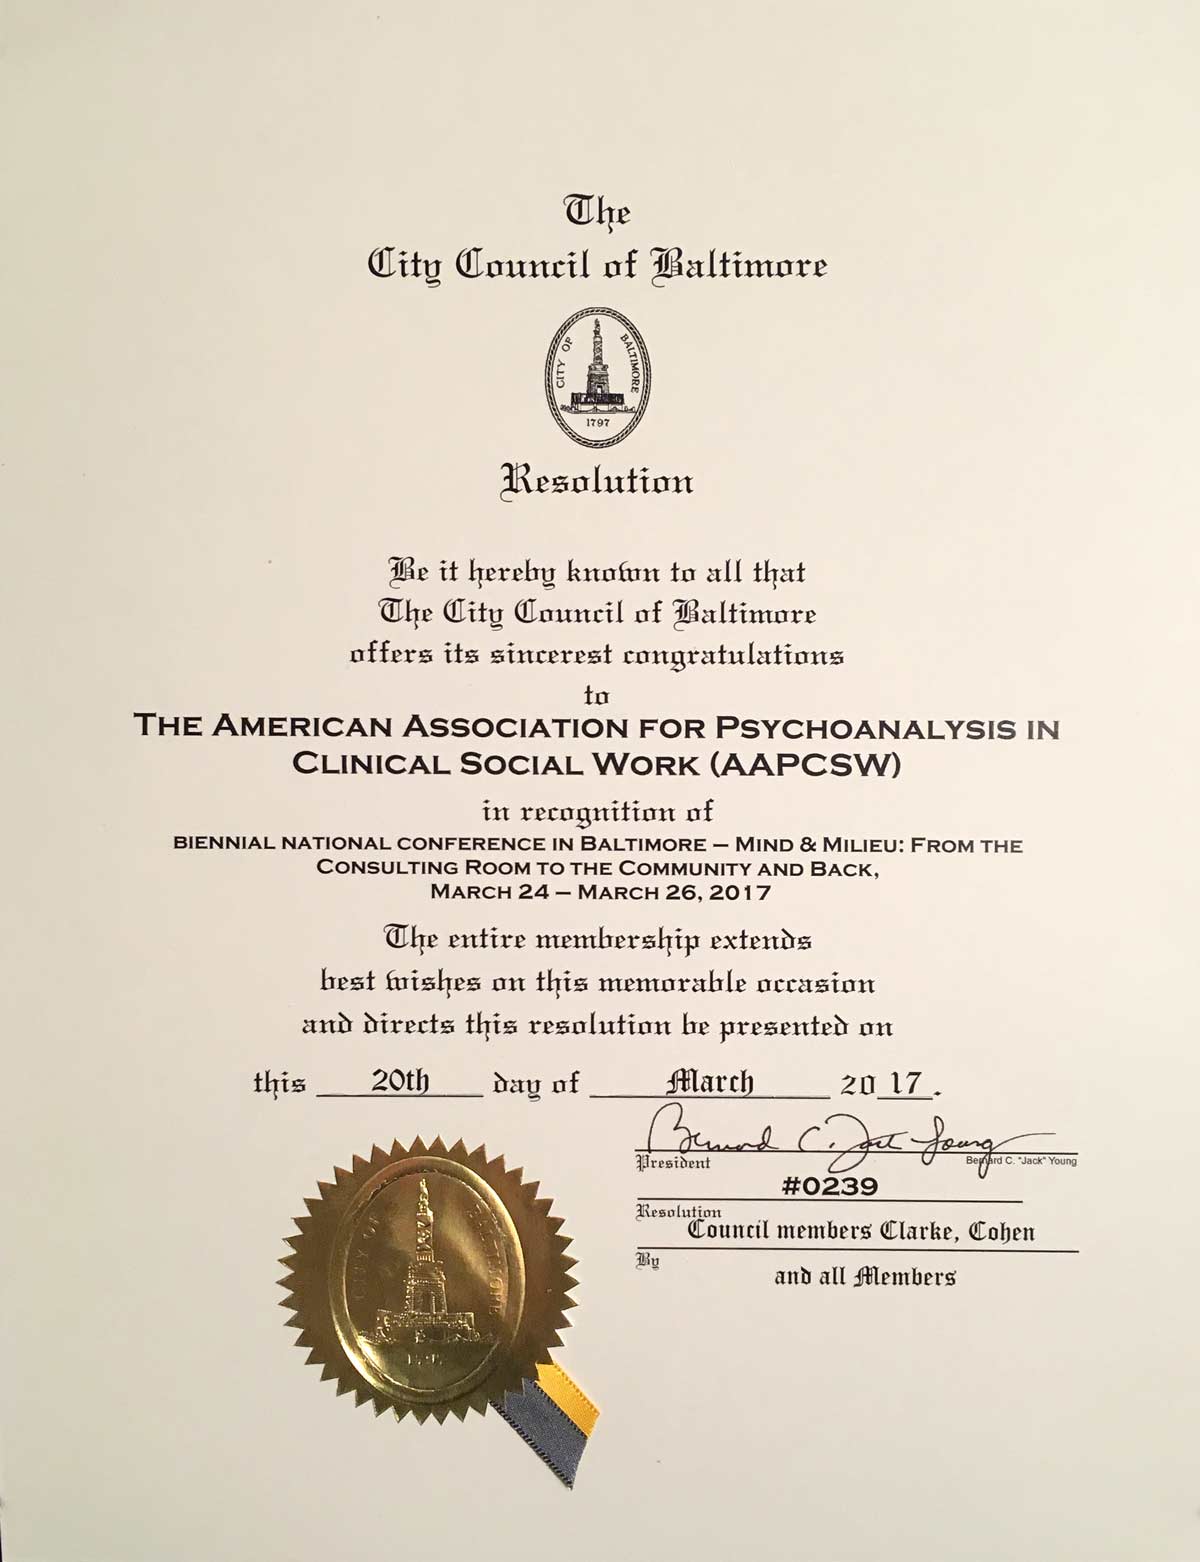 Photo of Baltimore City Council award to AAPCSW